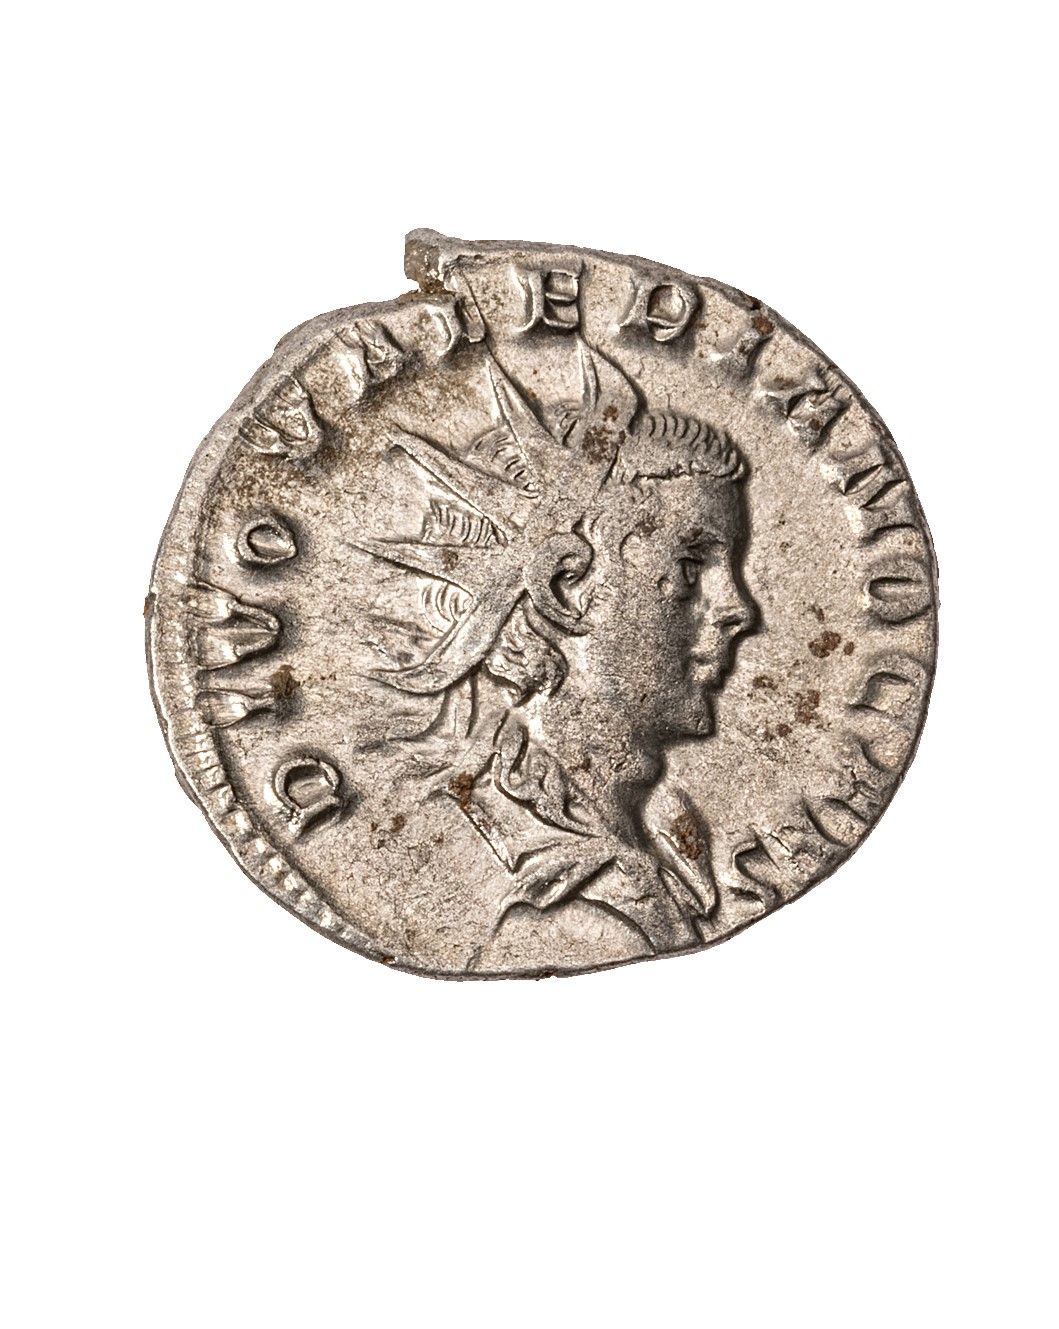 Null VALERIANA II (257-258) 

Antonino 

A/ DIVO VALERIANO CAES 

R/ CONSECRATIO&hellip;